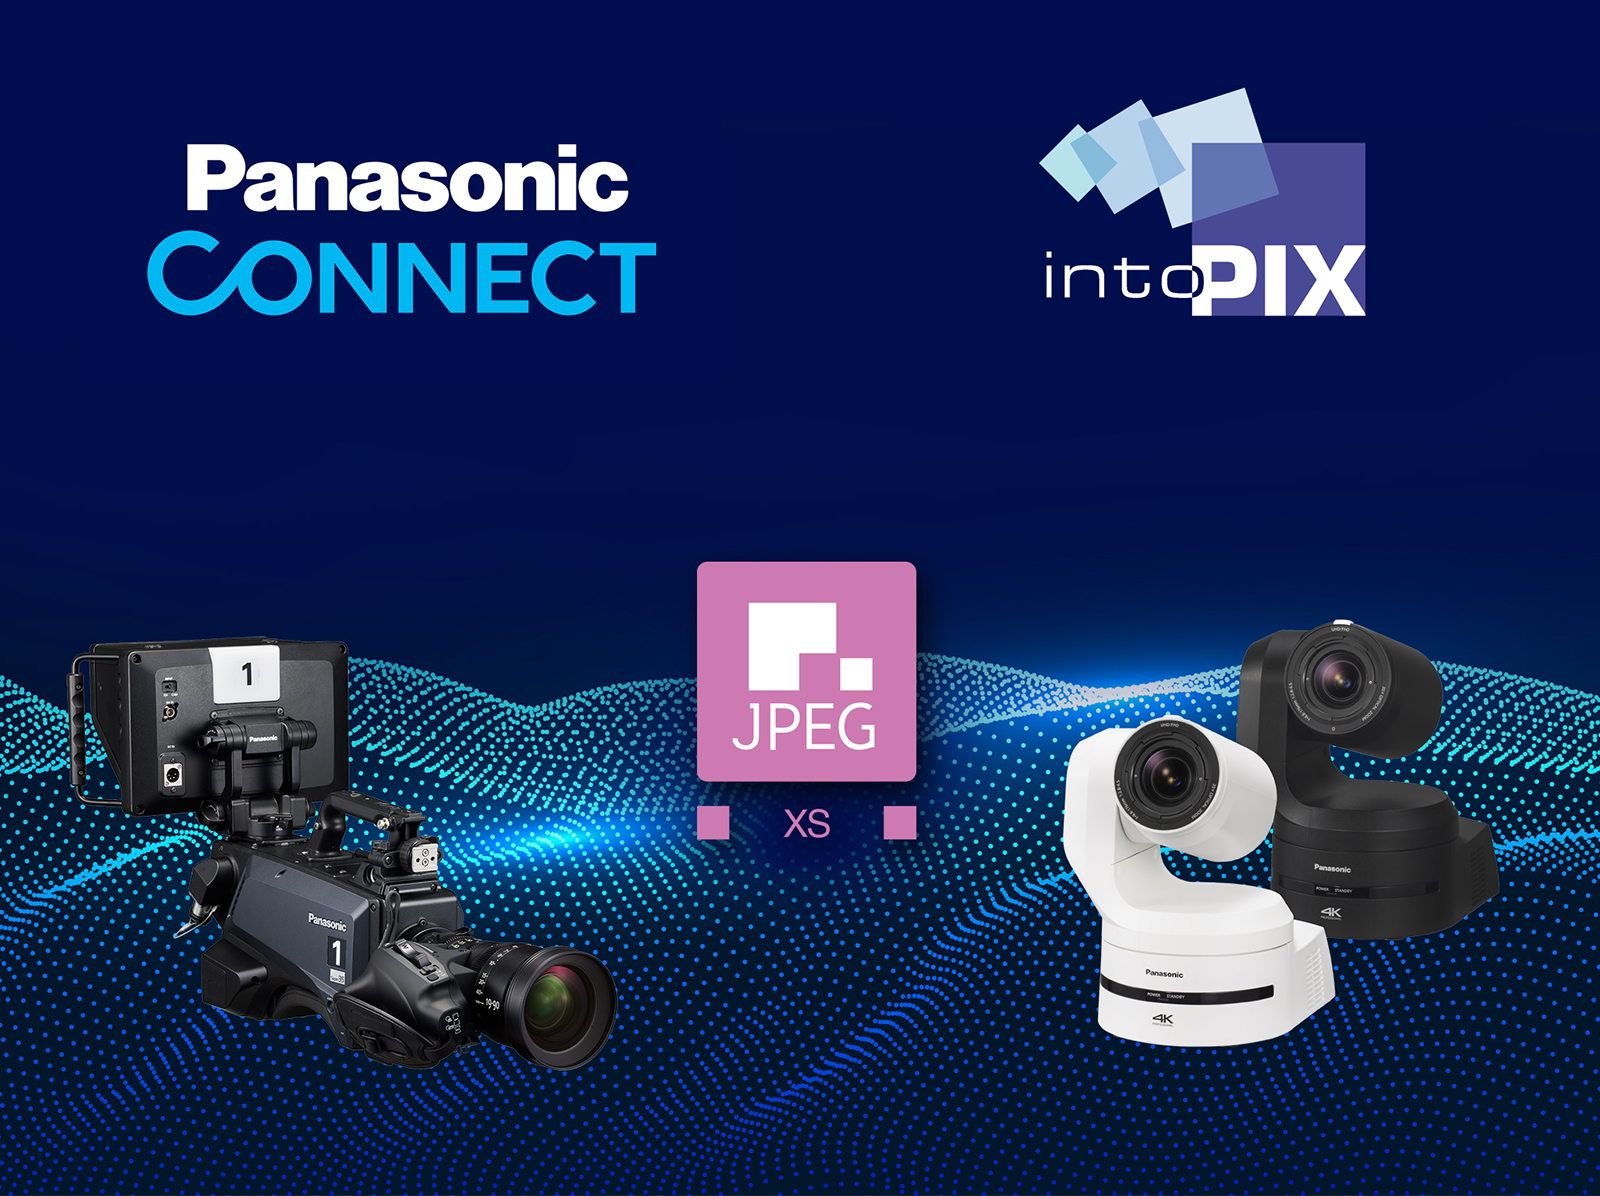 Panasonic Connect Partners with intoPIX to Enable New JPEG XS 